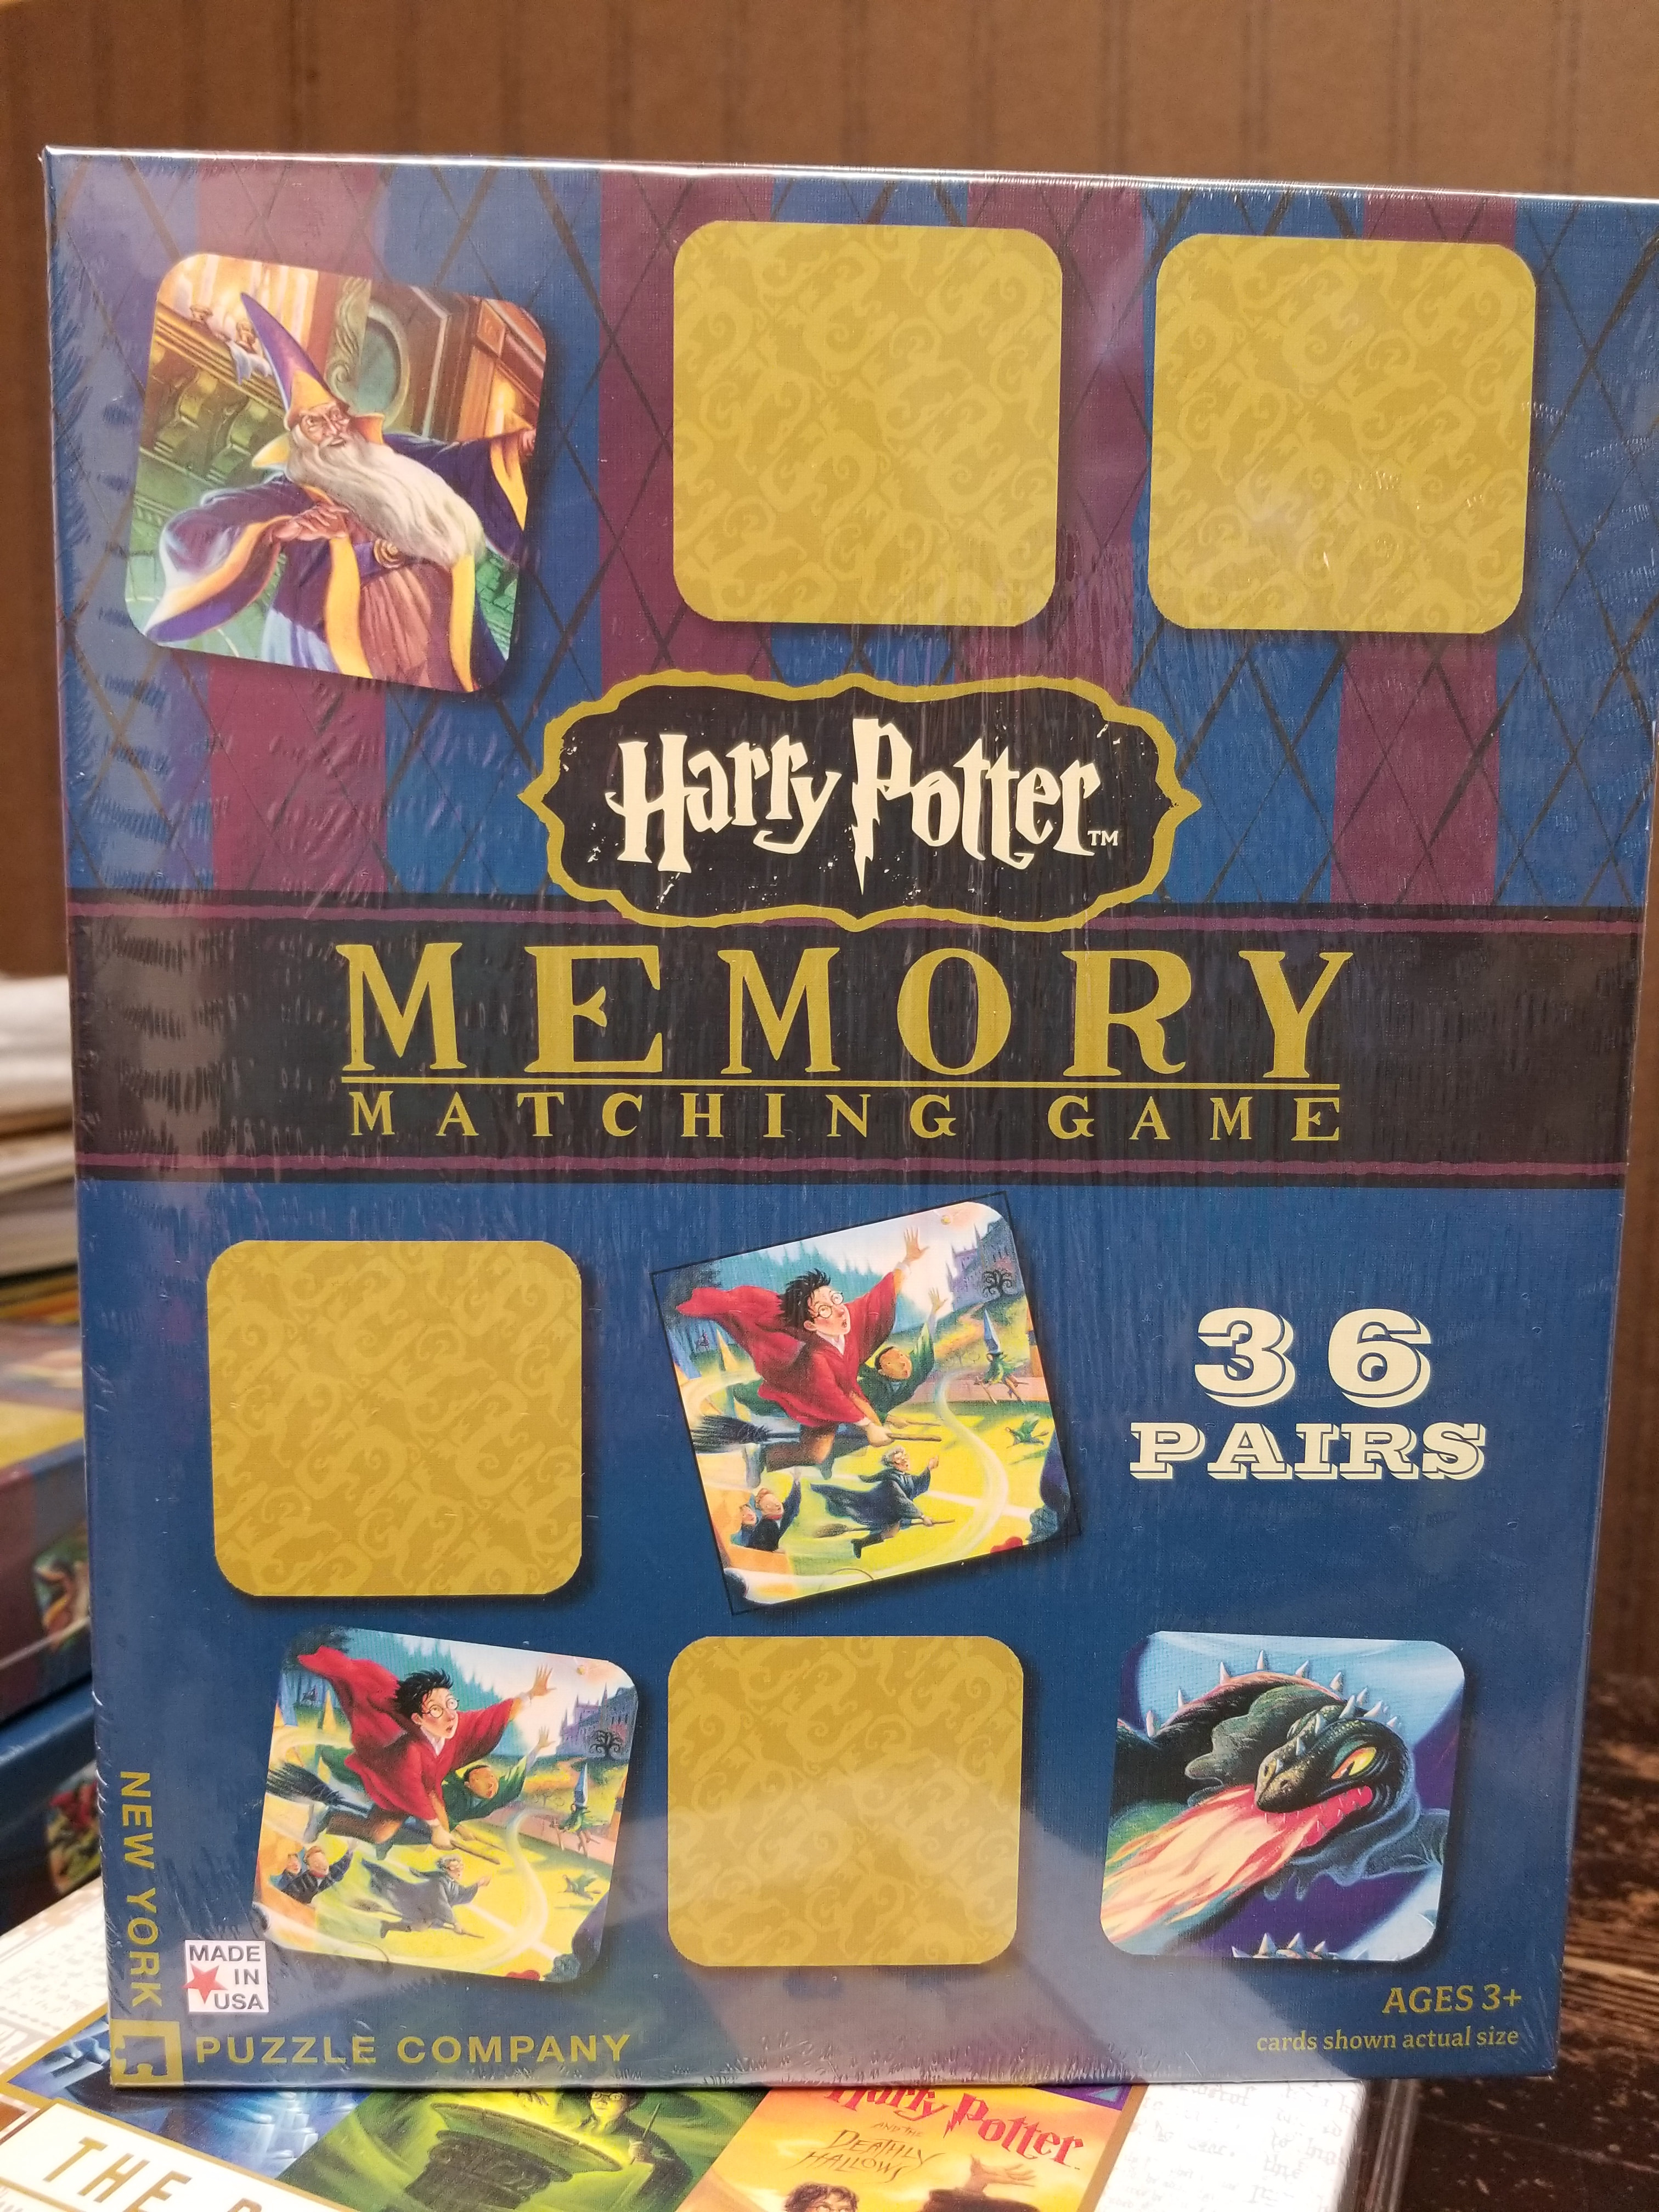 harry potter memory master game